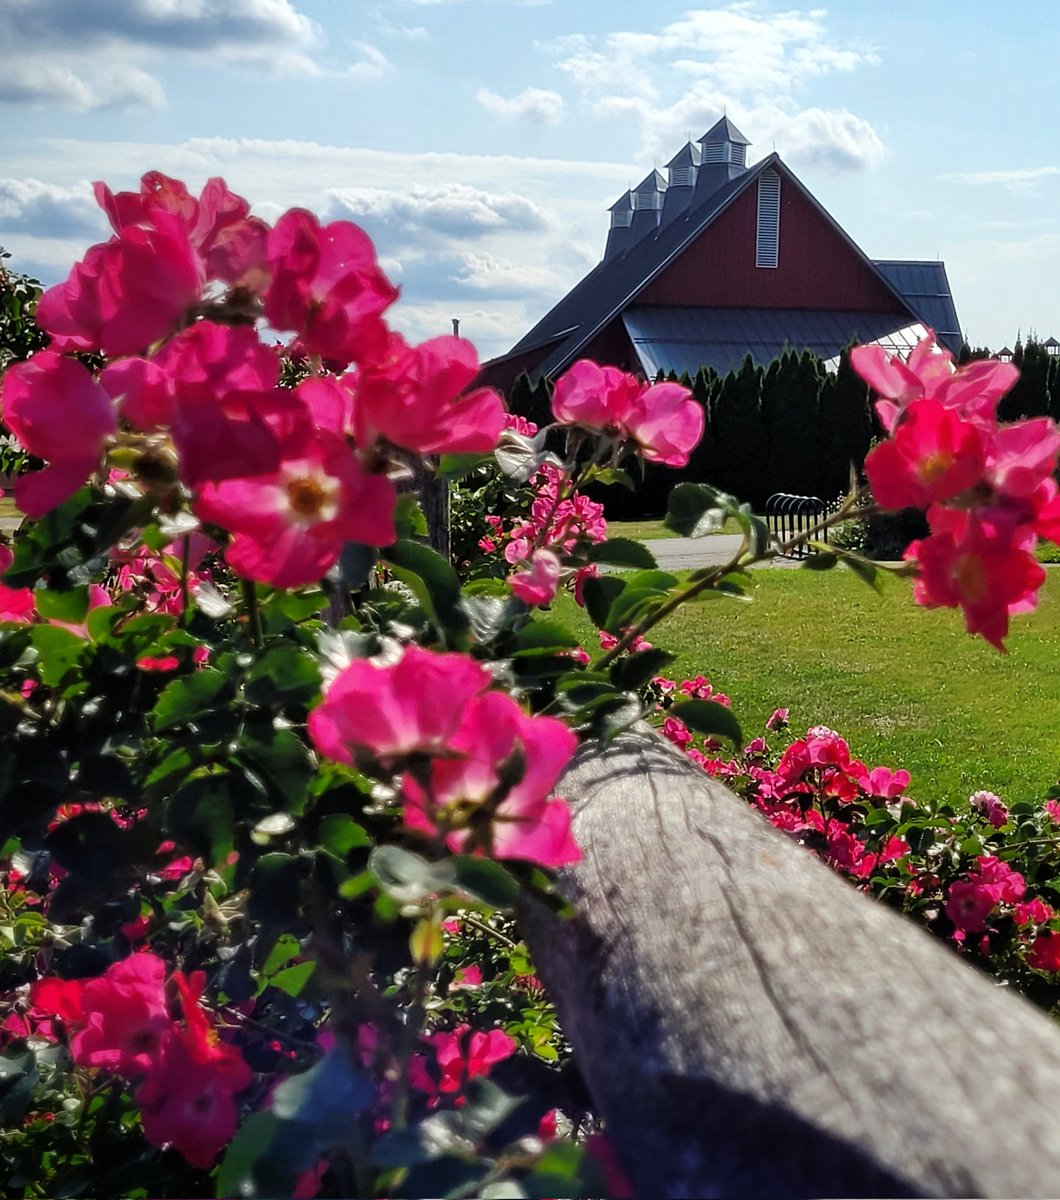 #Roses in bloom at the Central Experimental Farm, in #Ottawa, #Ontario, #Canada

#ThePhotoHour #ThePhotoMode @YoushowmeP #NaturePhotography #naturebeauty #myottawa #discoverON #landscapephotography